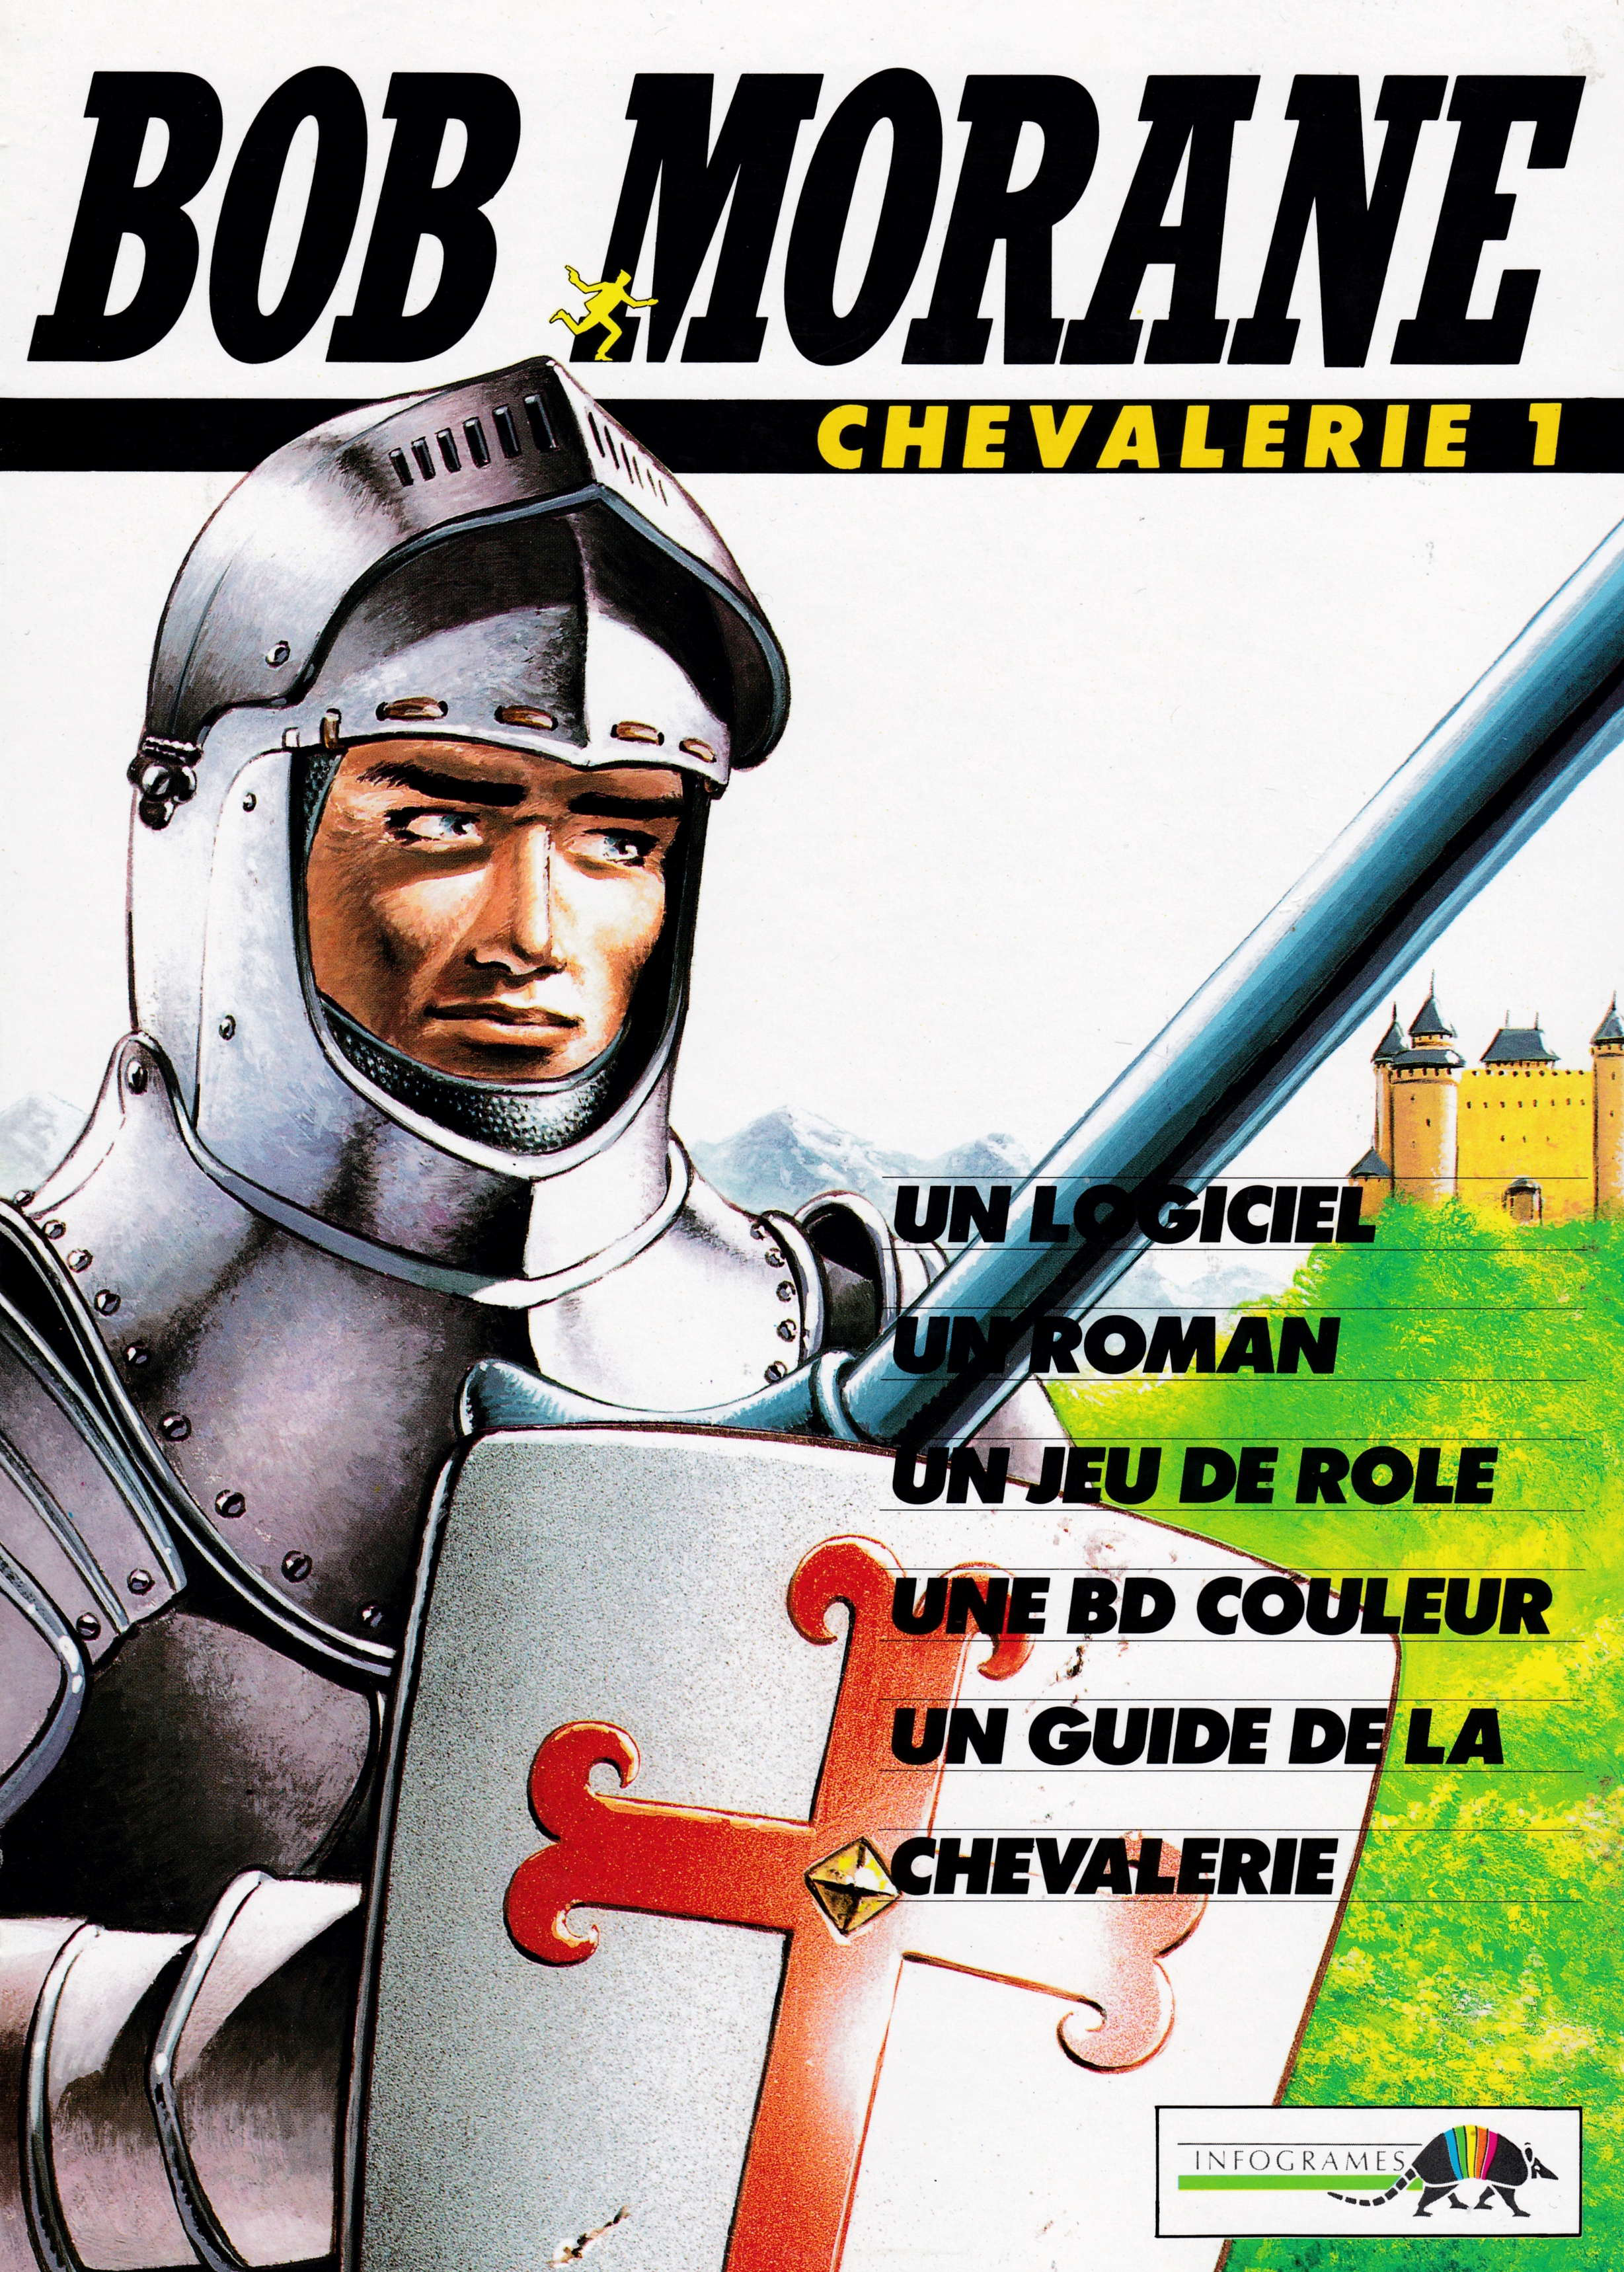 cover of the Amstrad CPC game Bob Morane - Chevalerie 1  by GameBase CPC